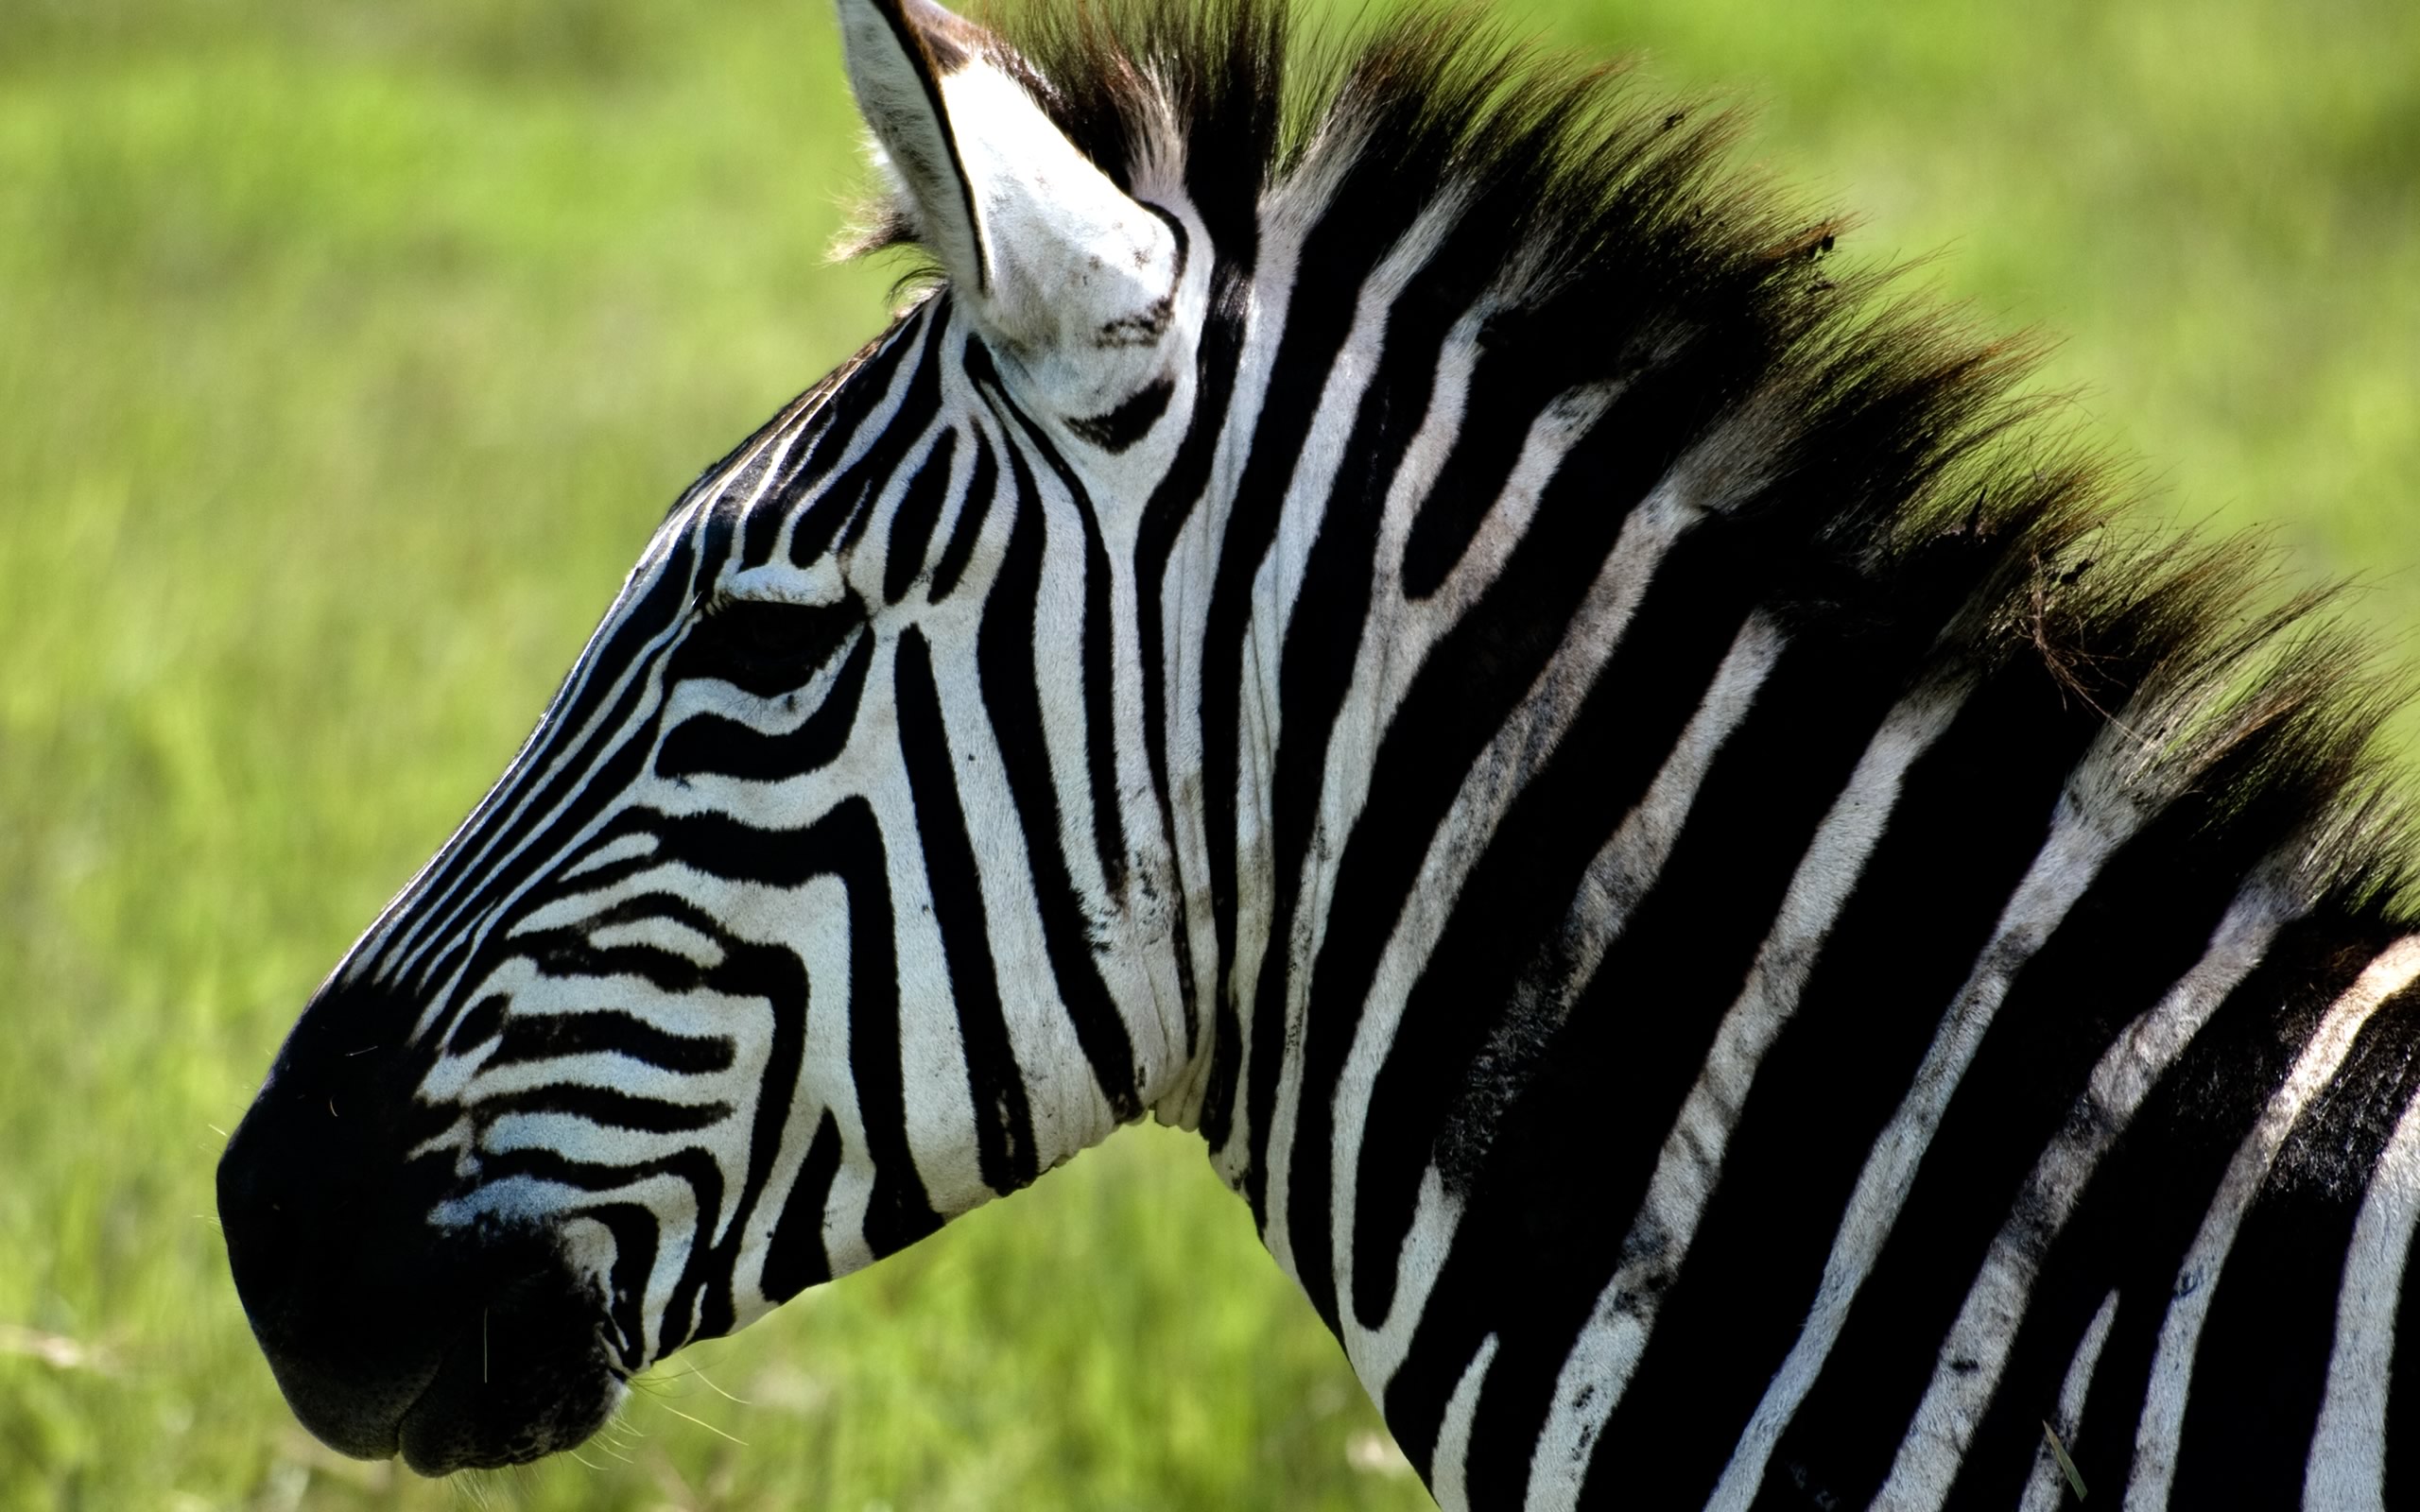 Zebra Face Profi HD Wallpaper Background Image